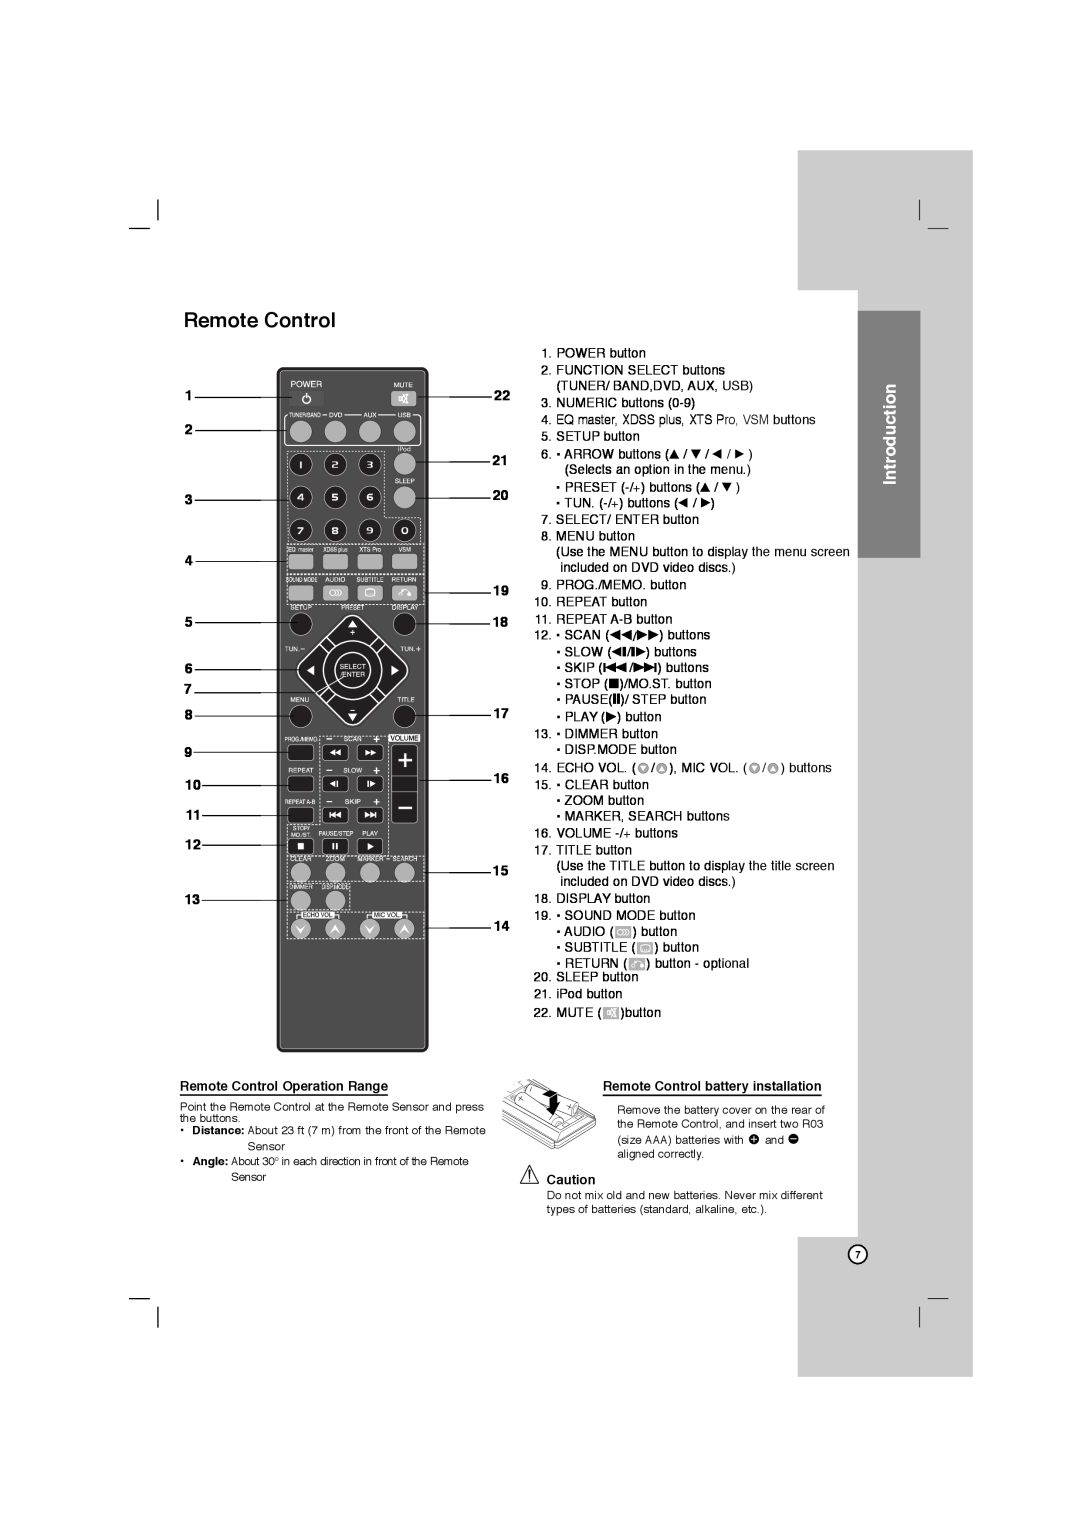 LG Electronics LFD750, FBS162V owner manual Introduction, 3 4 5 6 7 8 9 10 11, Remote Control Operation Range 